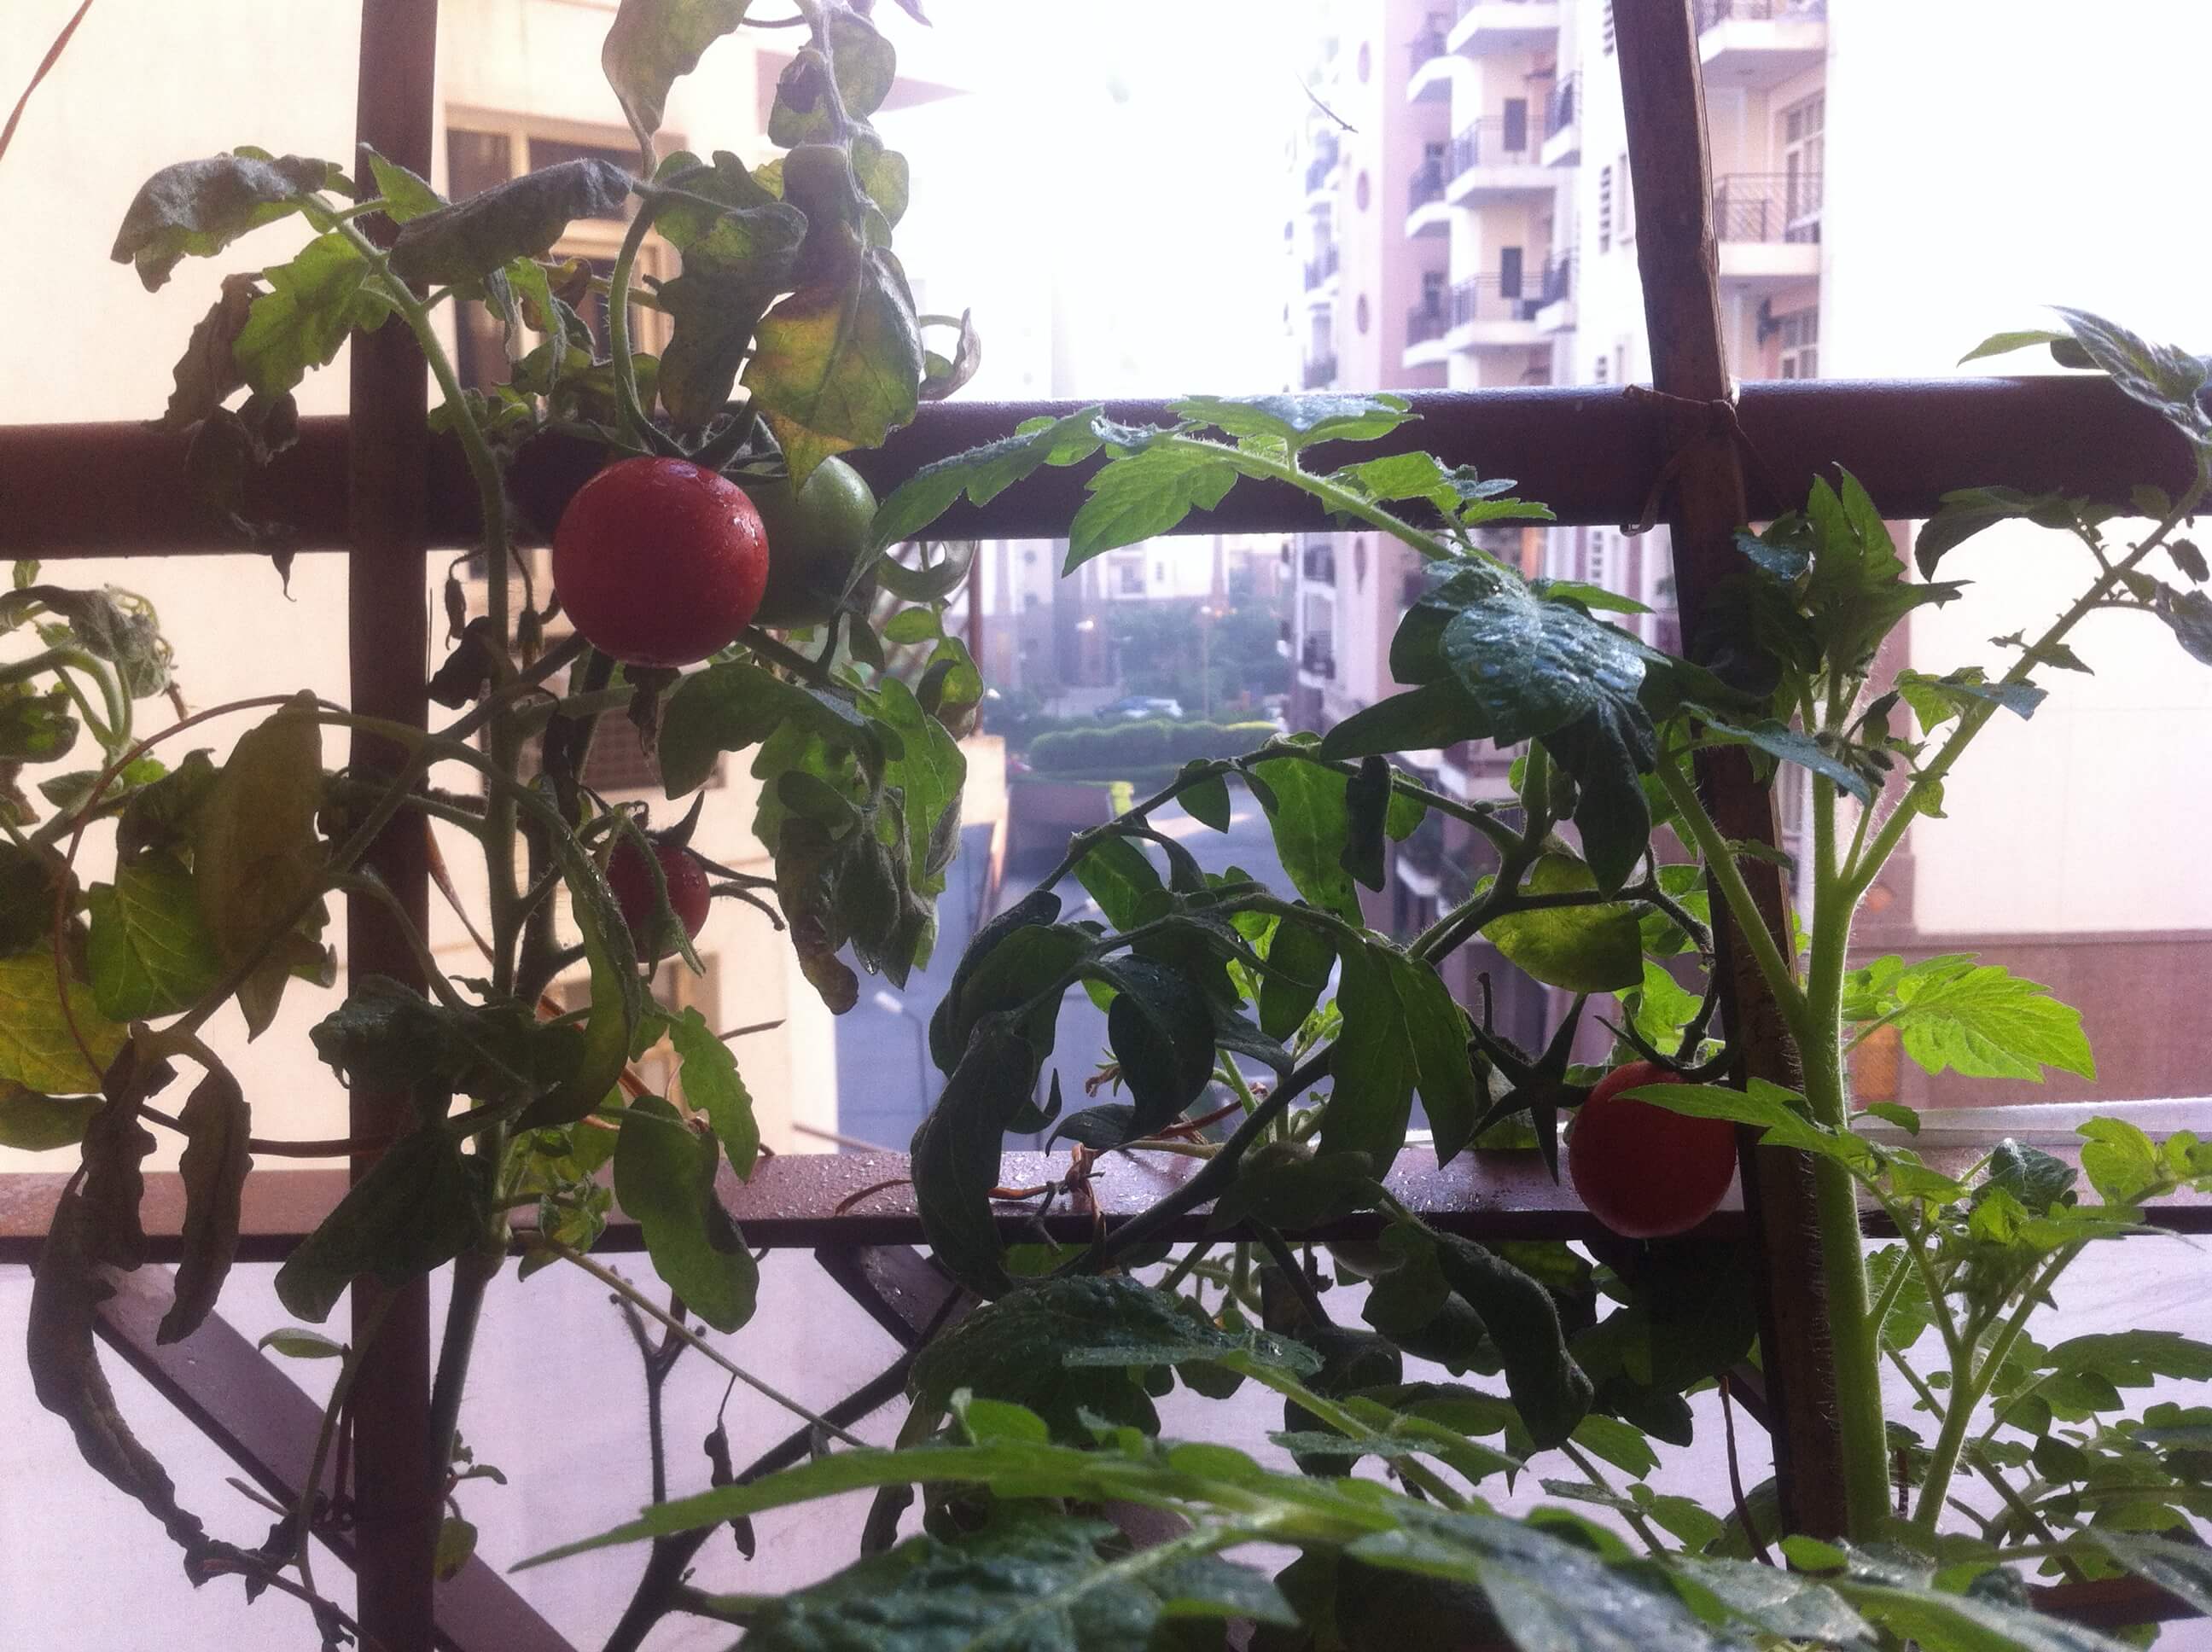 Three ripe tomatoes on a vine.